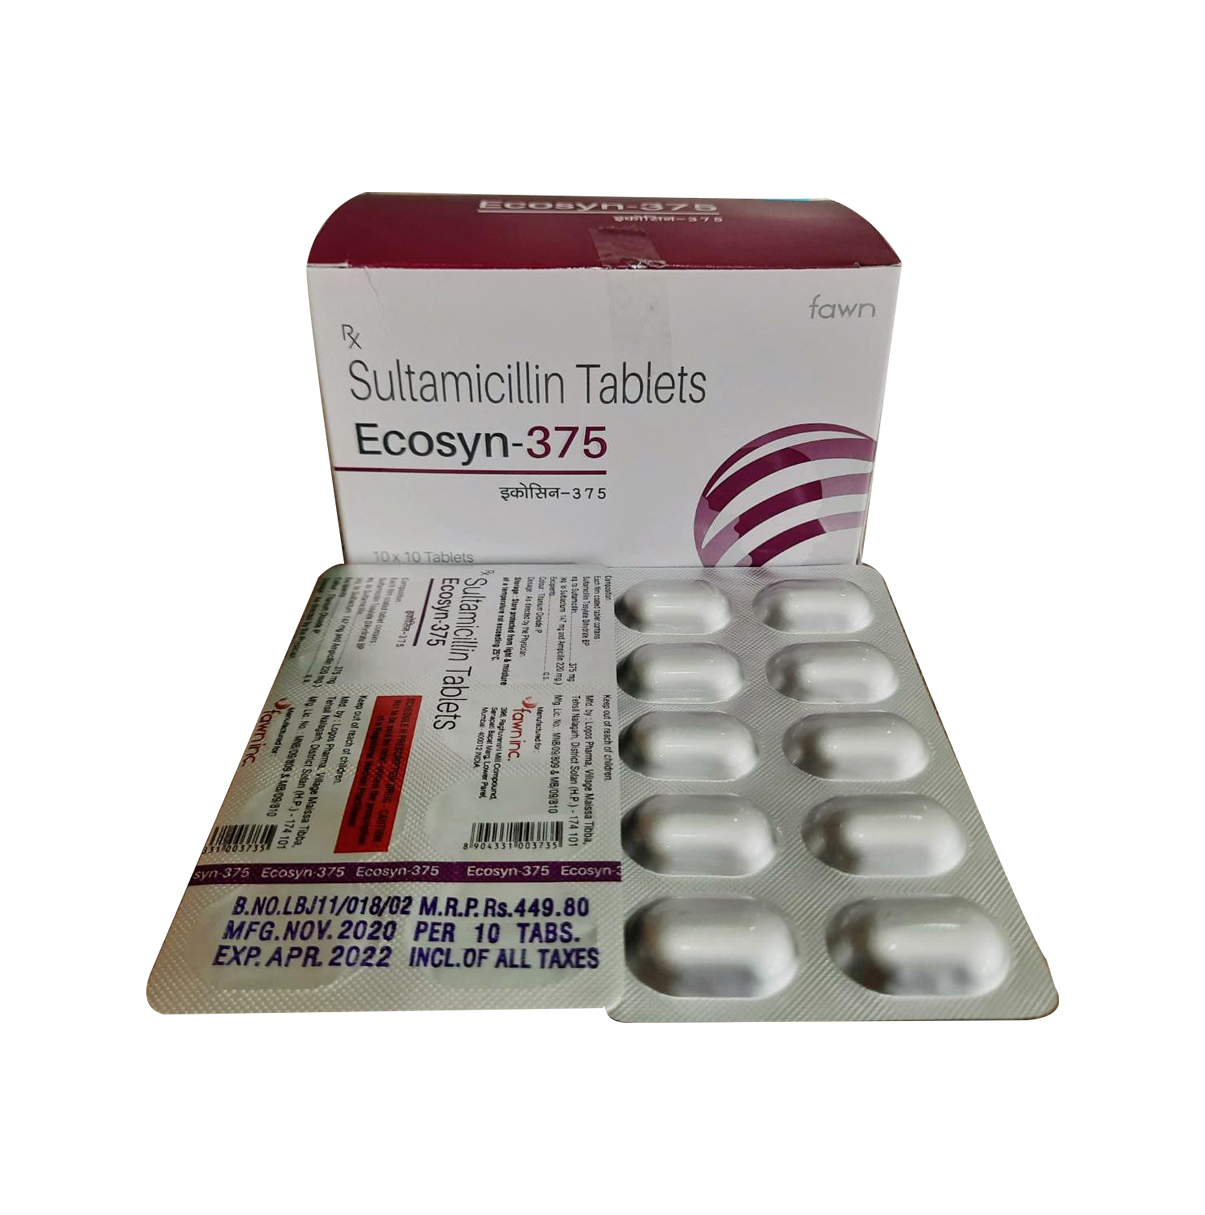 Product Name: ECOSYN 375, Compositions of Sultamicillin 375 mg. are Sultamicillin 375 mg. - Fawn Incorporation